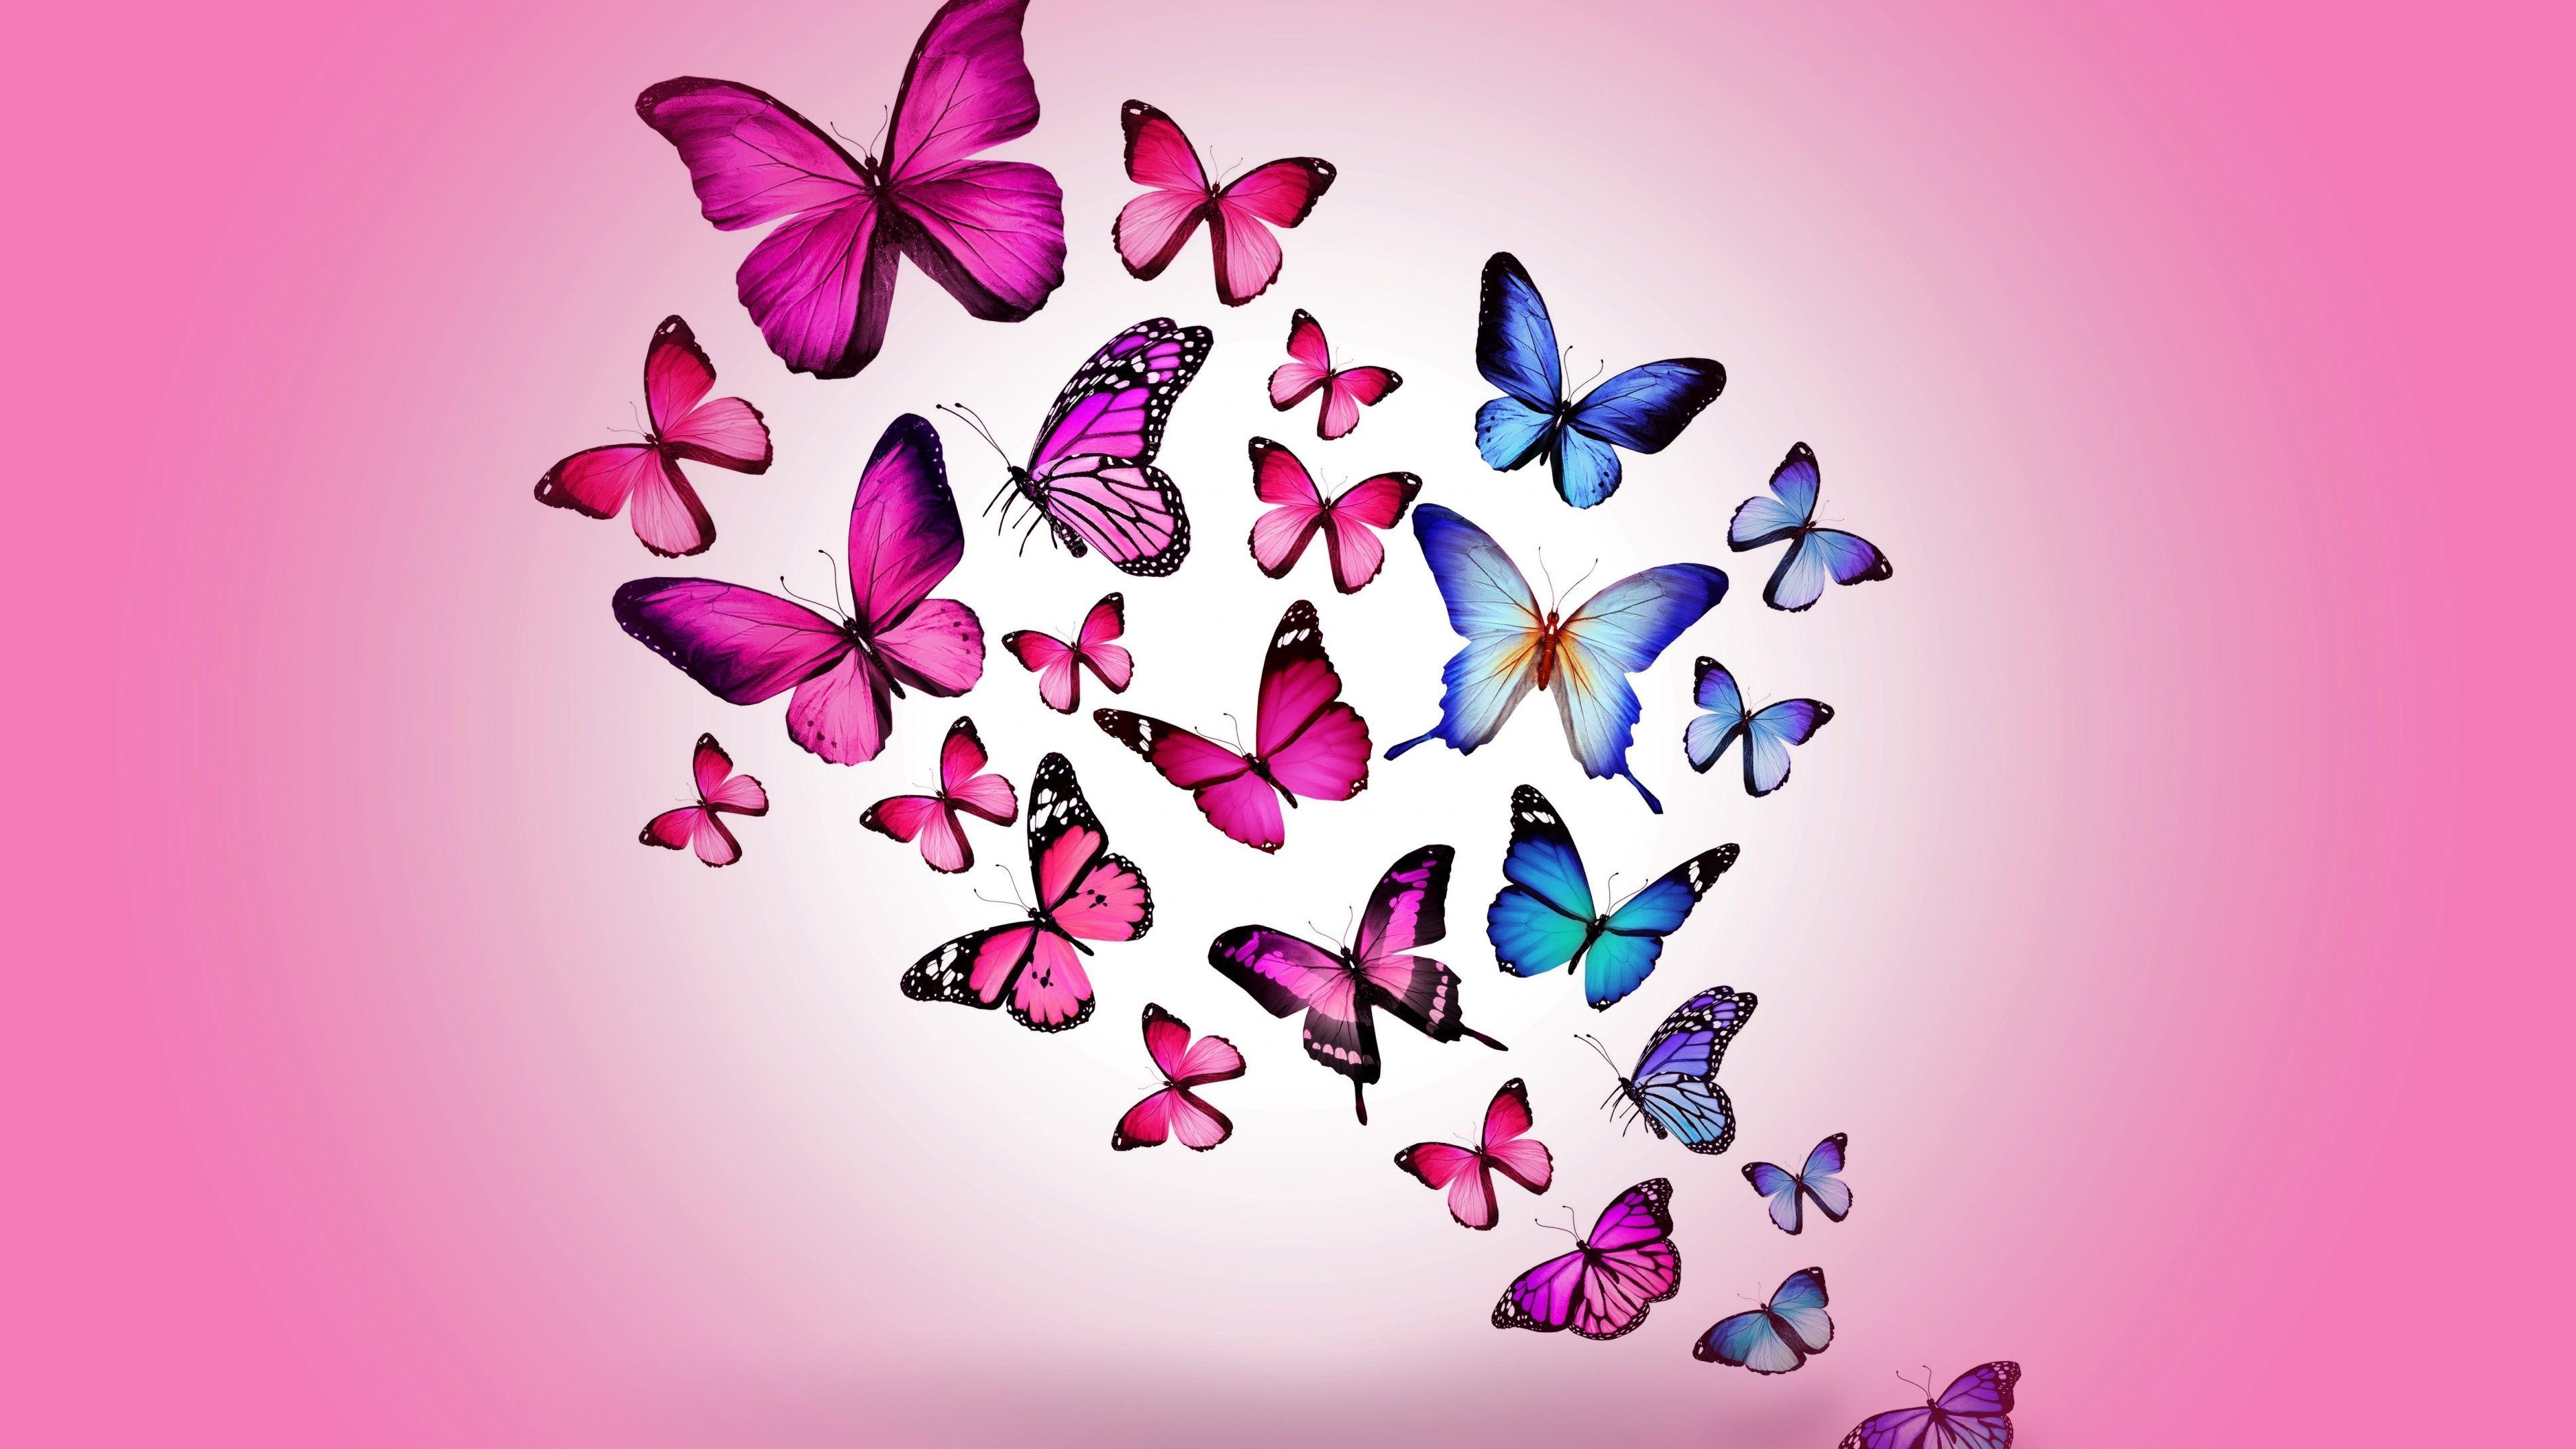 Pink Butterfly Wallpaper Image. mariposas. Wallpaper